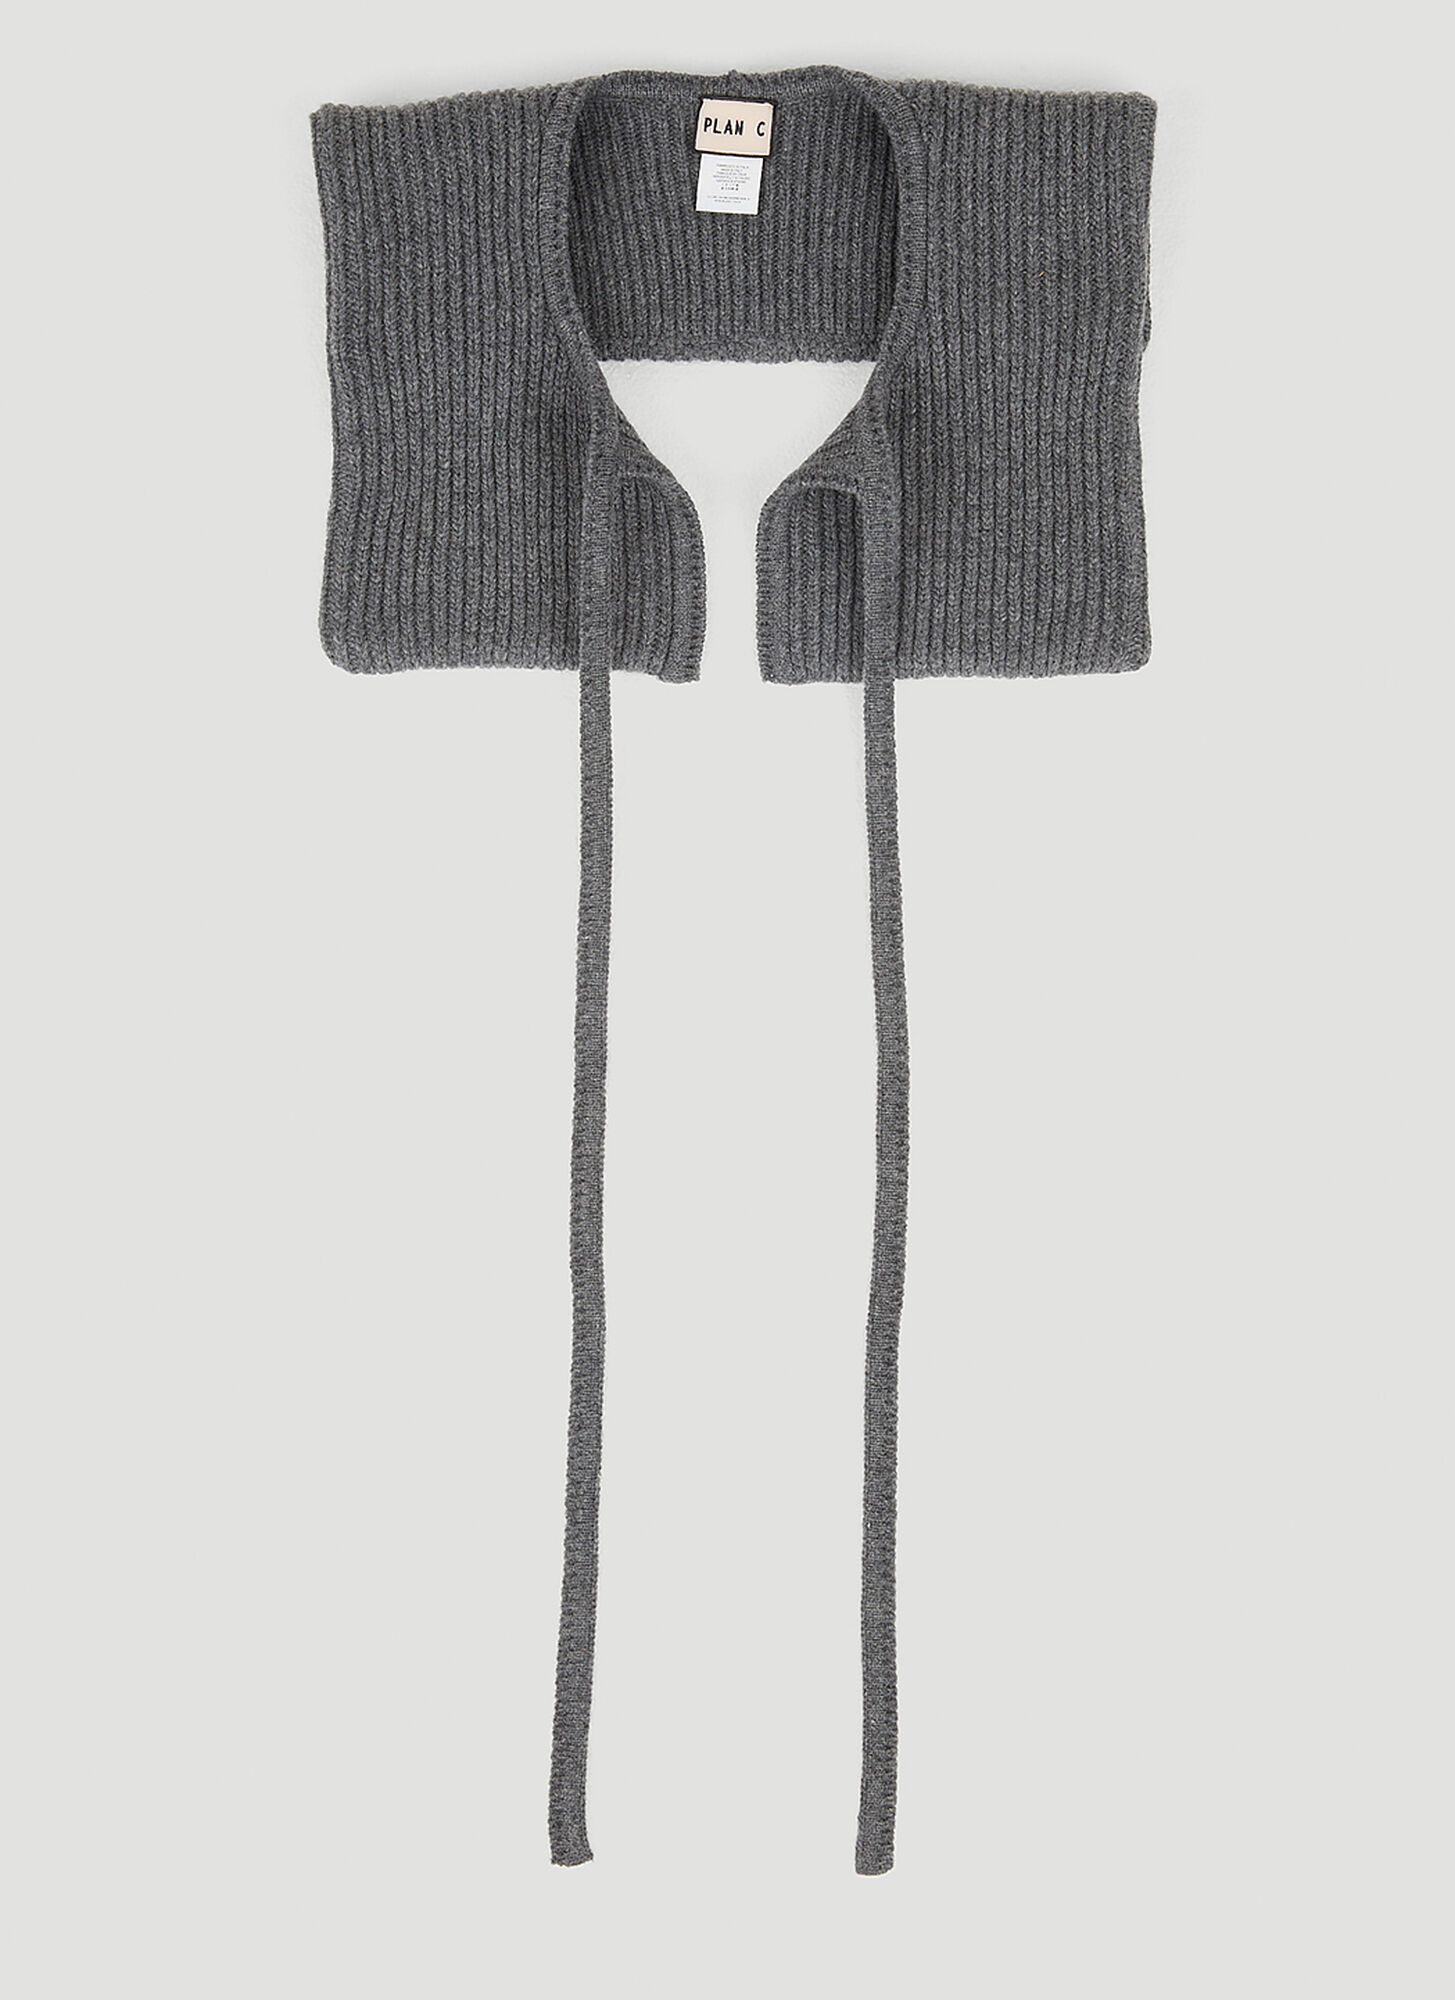 Plan C Knit Collar Female Grey